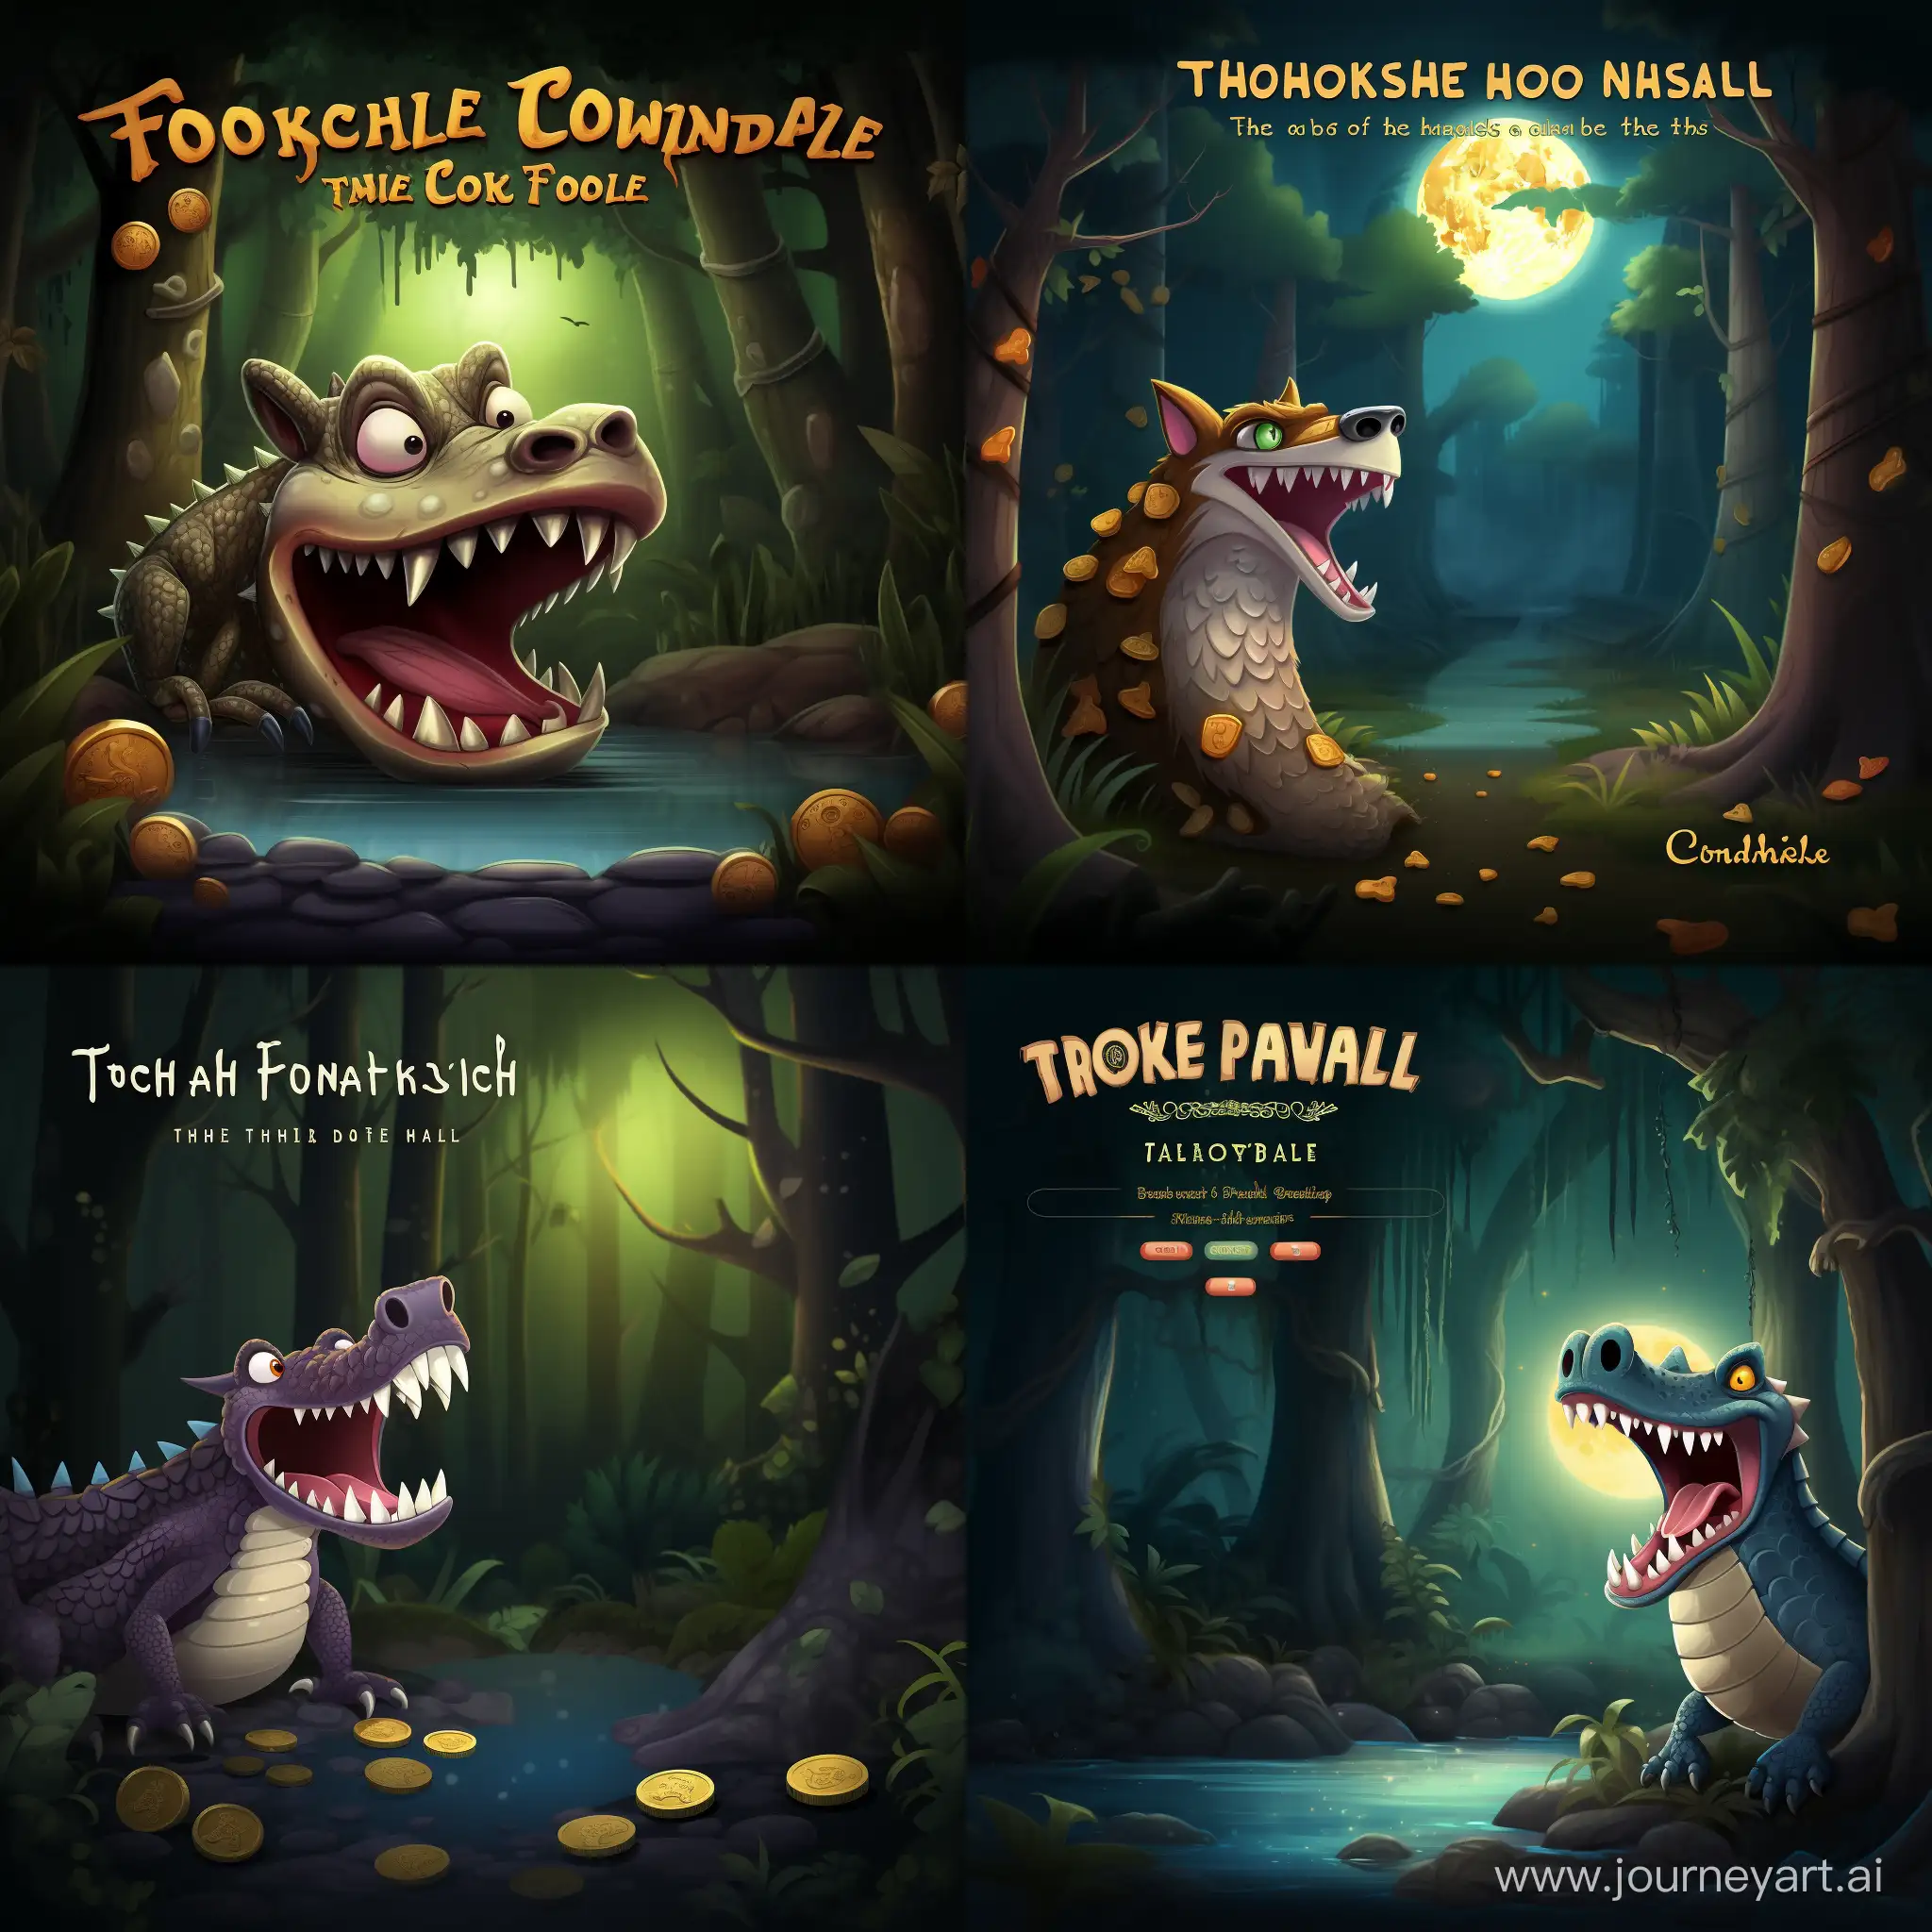 Mystical-Crocodile-Guarding-Treasure-in-Enchanted-Forest